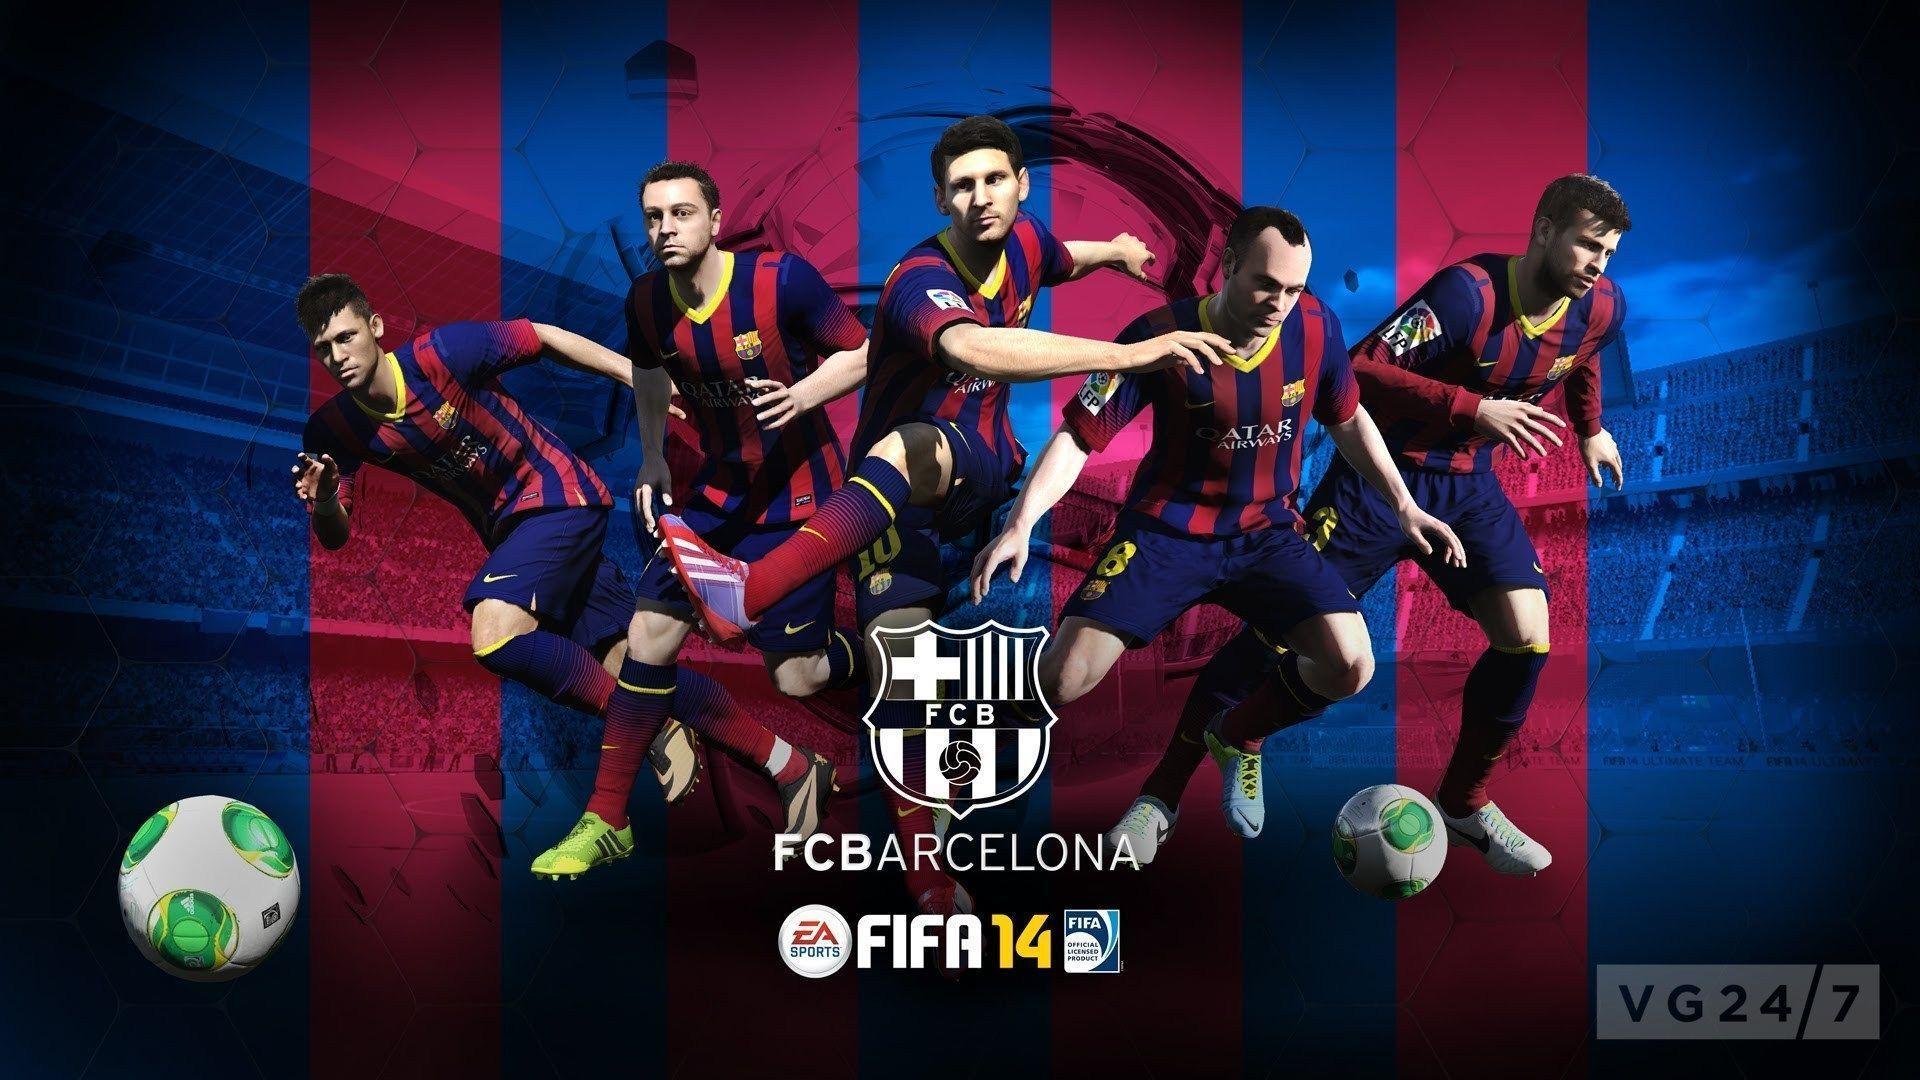 FC Barcelona FIFA football games wallpaper background